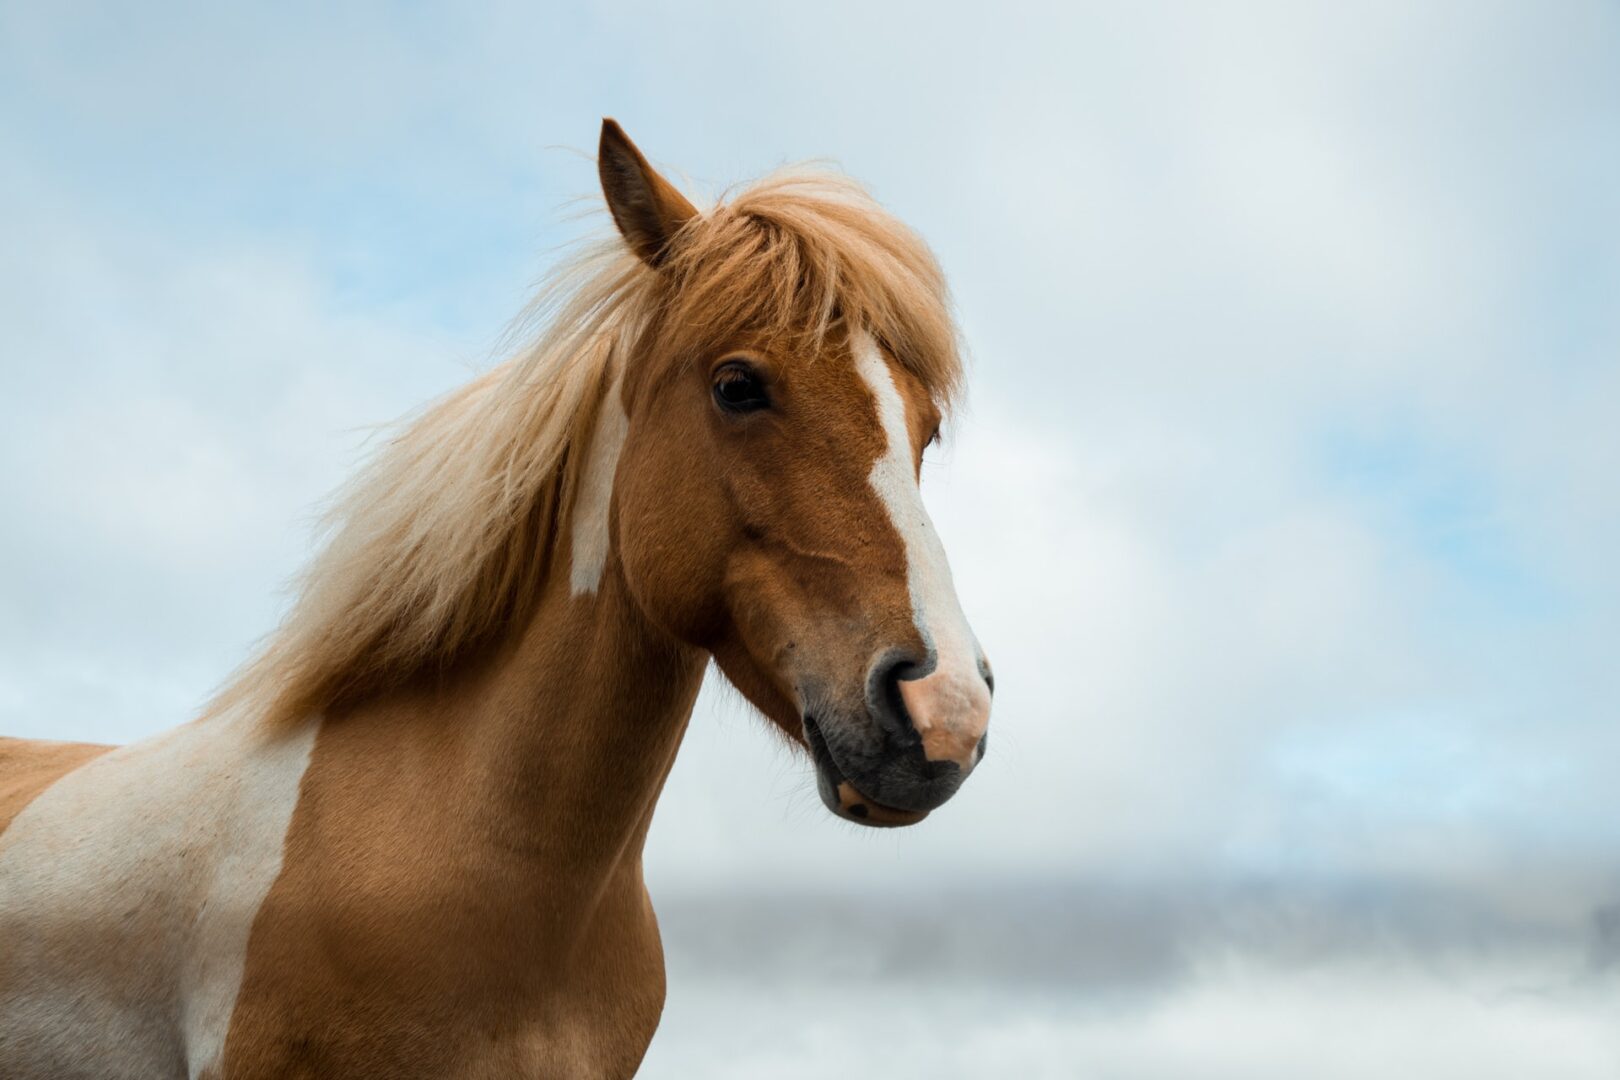 a headshot of a horse set against a cloudy sky